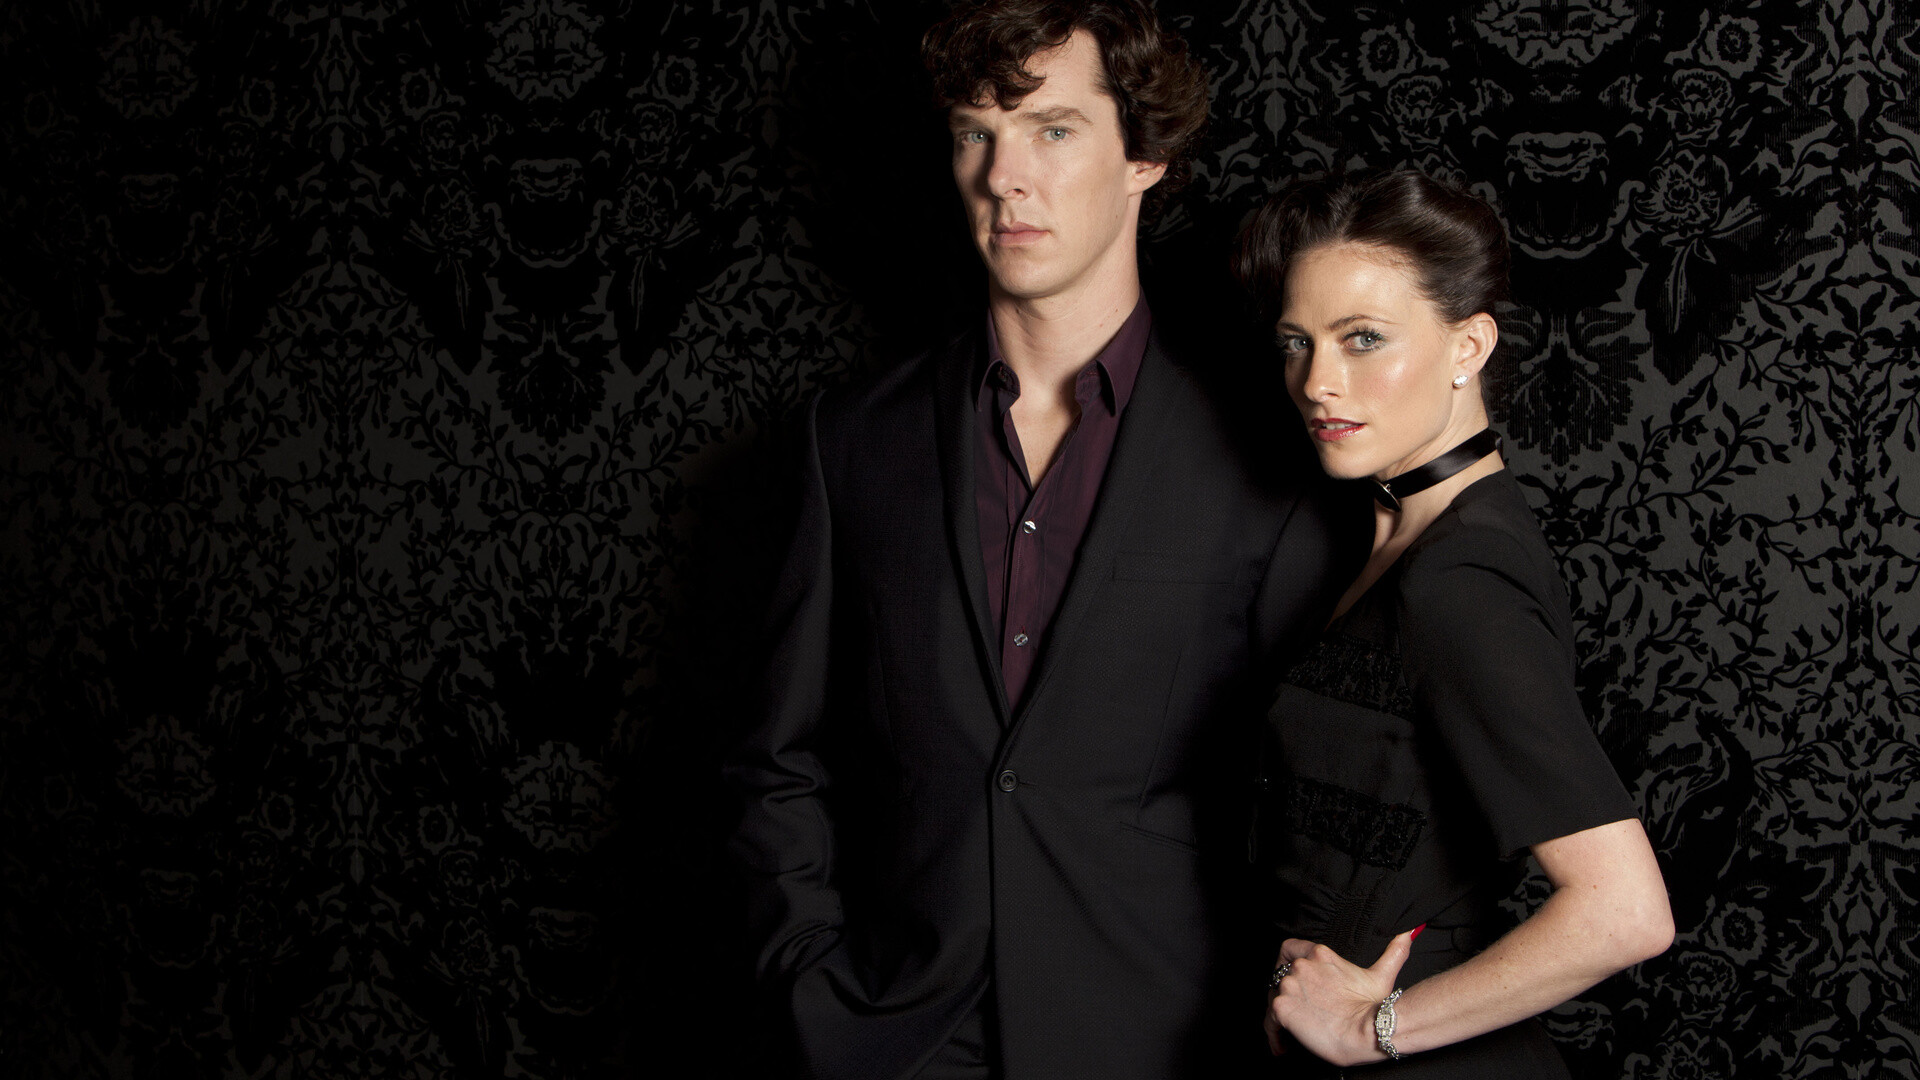 Sherlock (TV Series): Lara Pulver as Irene Adler, Series 2, Episode 1, A Scandal in Belgravia. 1920x1080 Full HD Wallpaper.